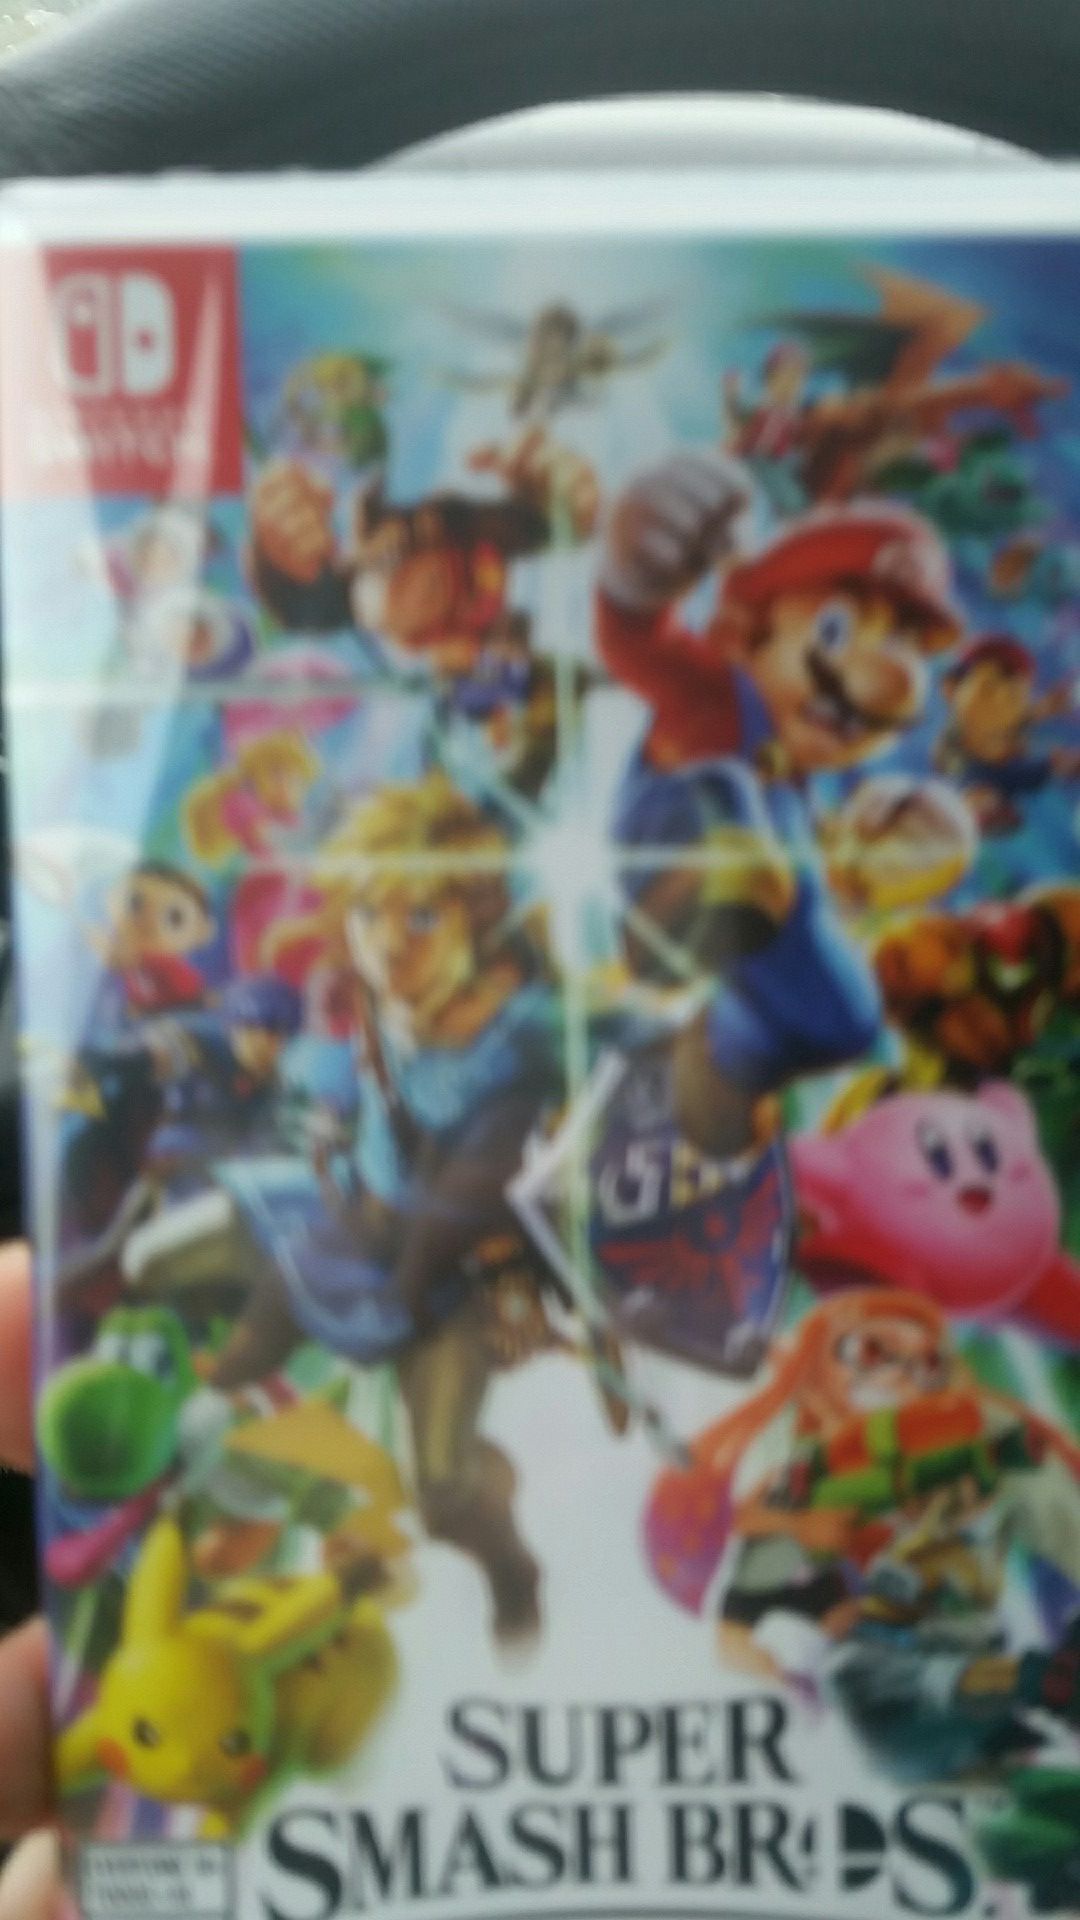 Super smash Bros for the Nintendo switch